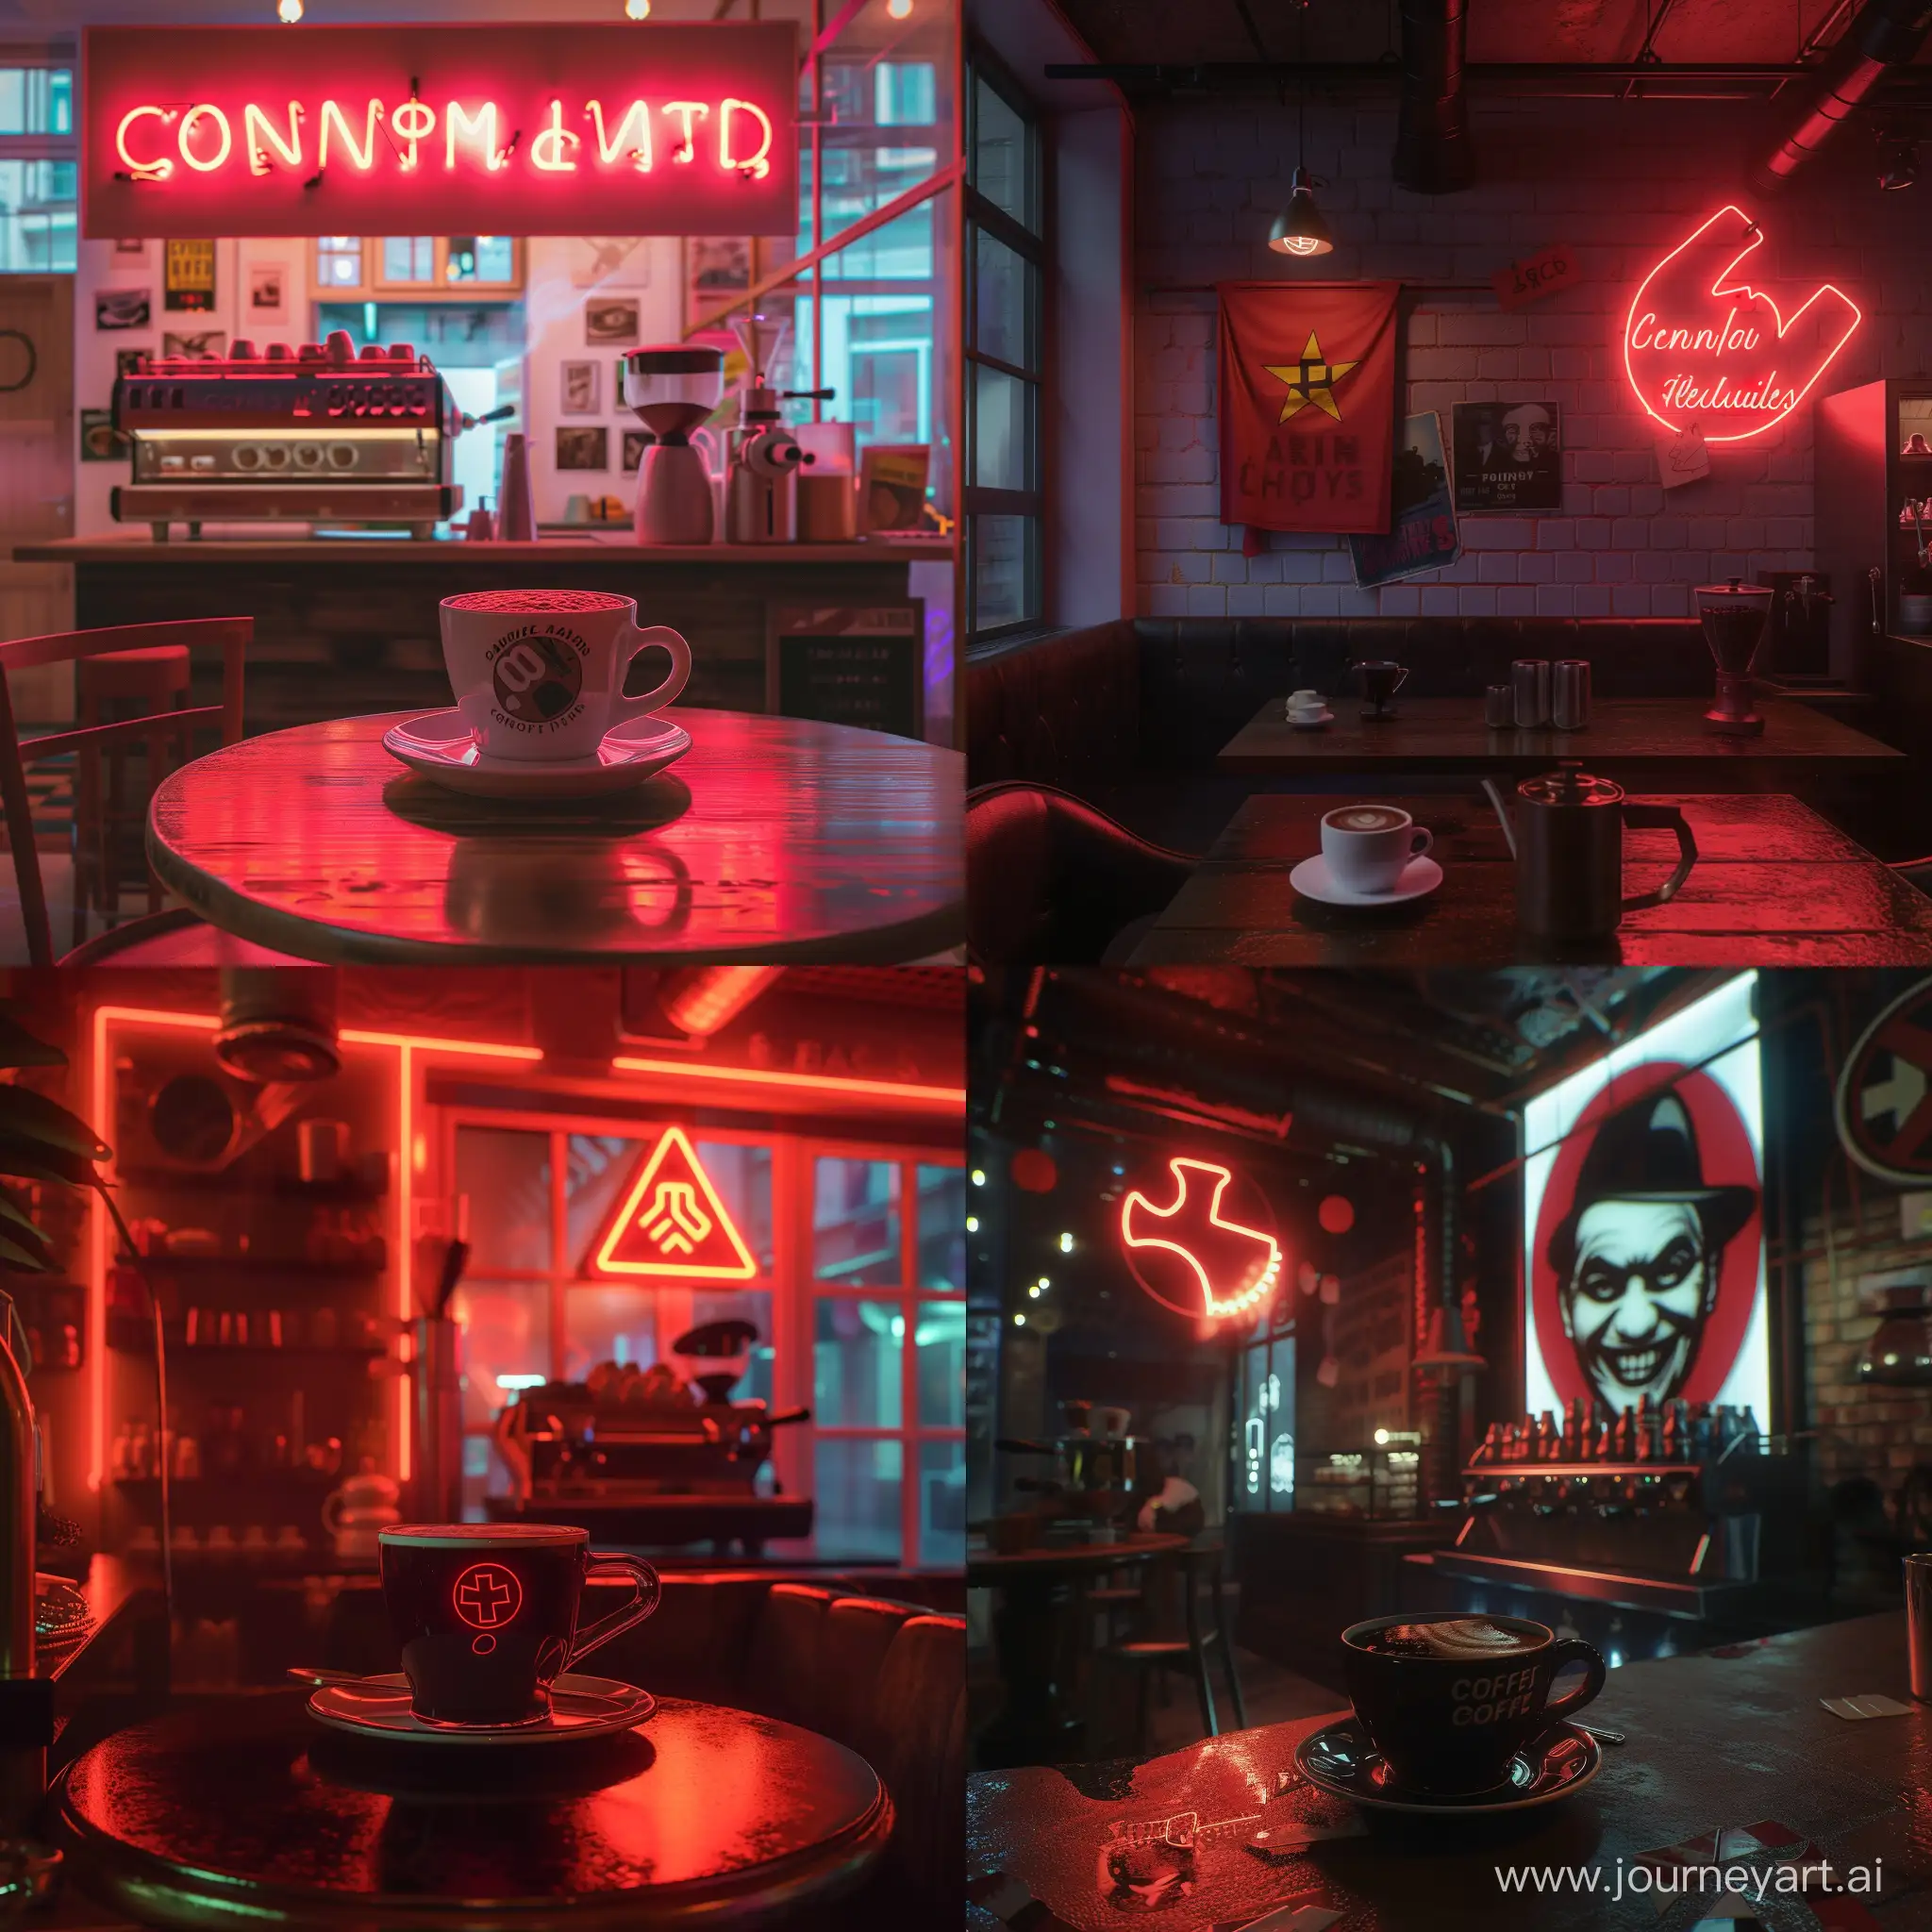 communism-nazi dream coffee shop, neon, propaganda, feeling of joy and depression, 8k, 44mm, real photo, realism, smile with coffee